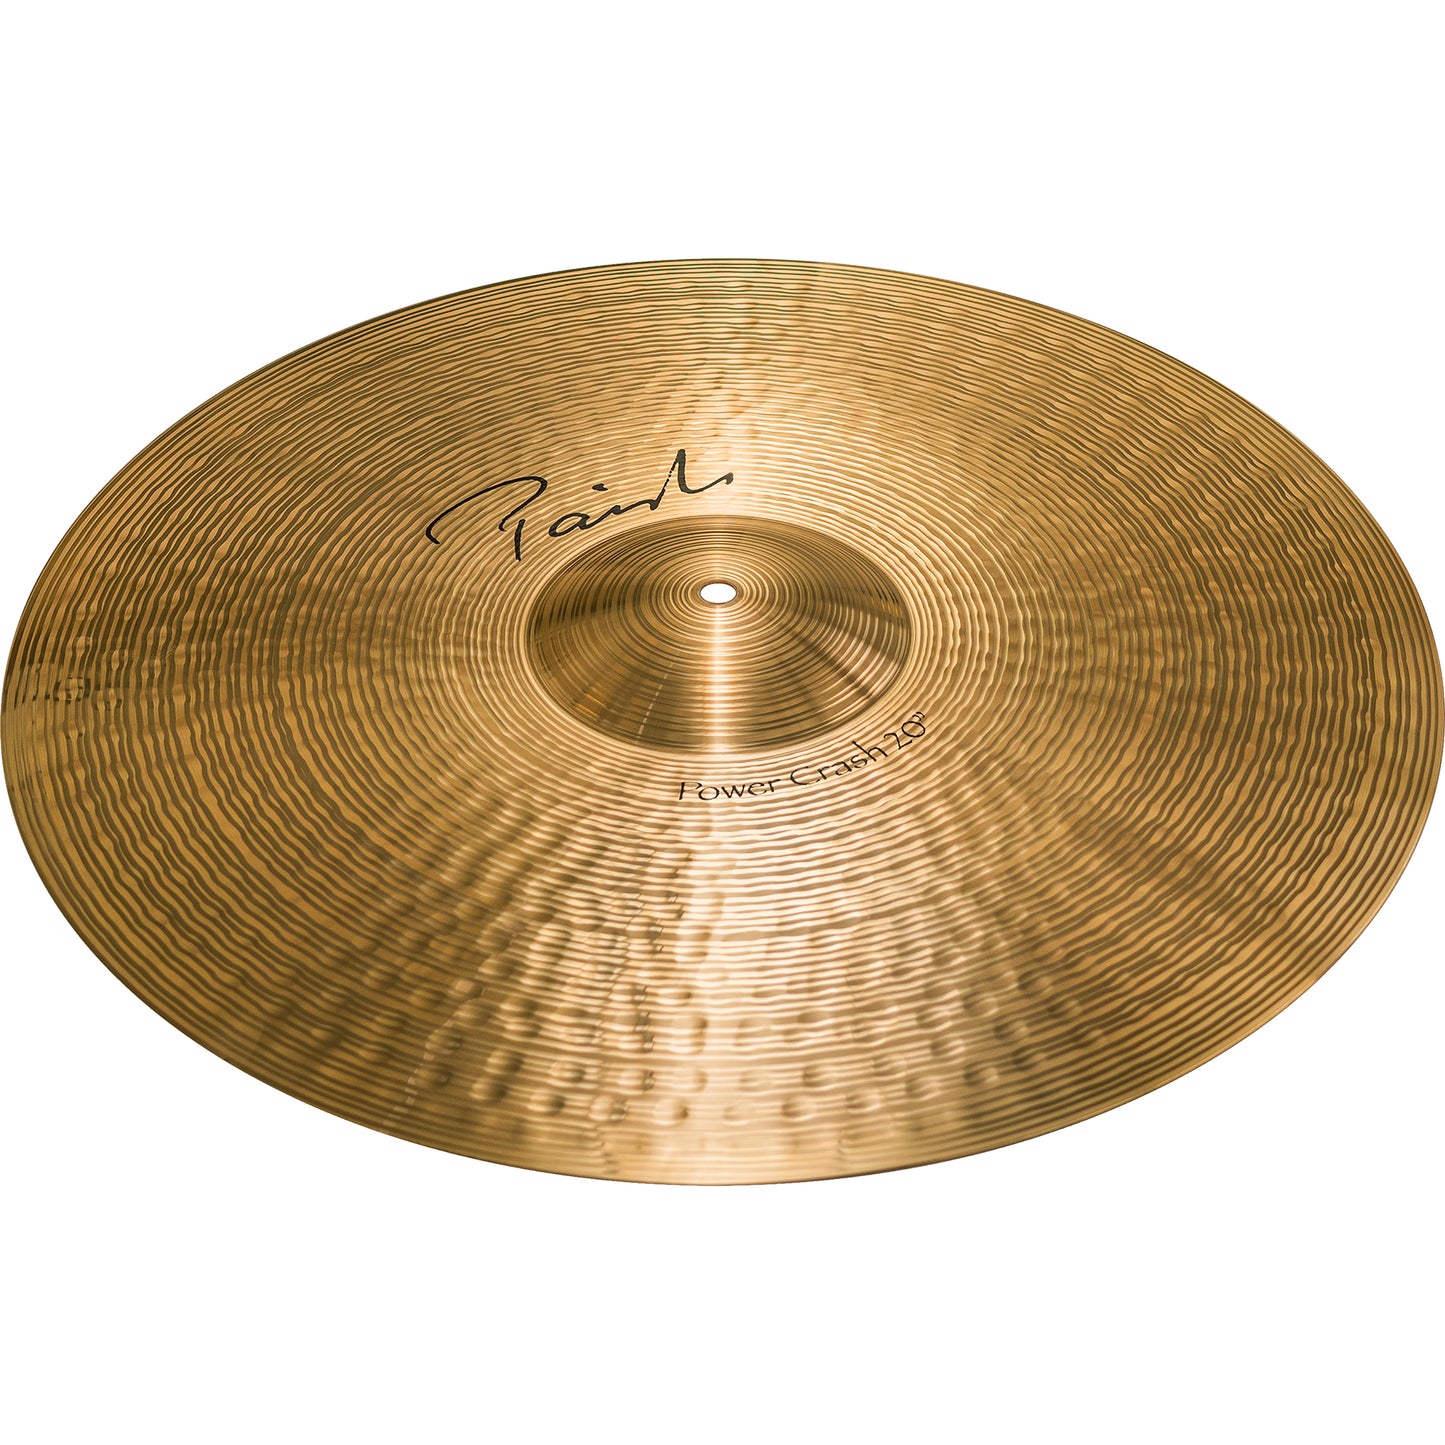 Paiste 20” Signature Power Crash Cymbal